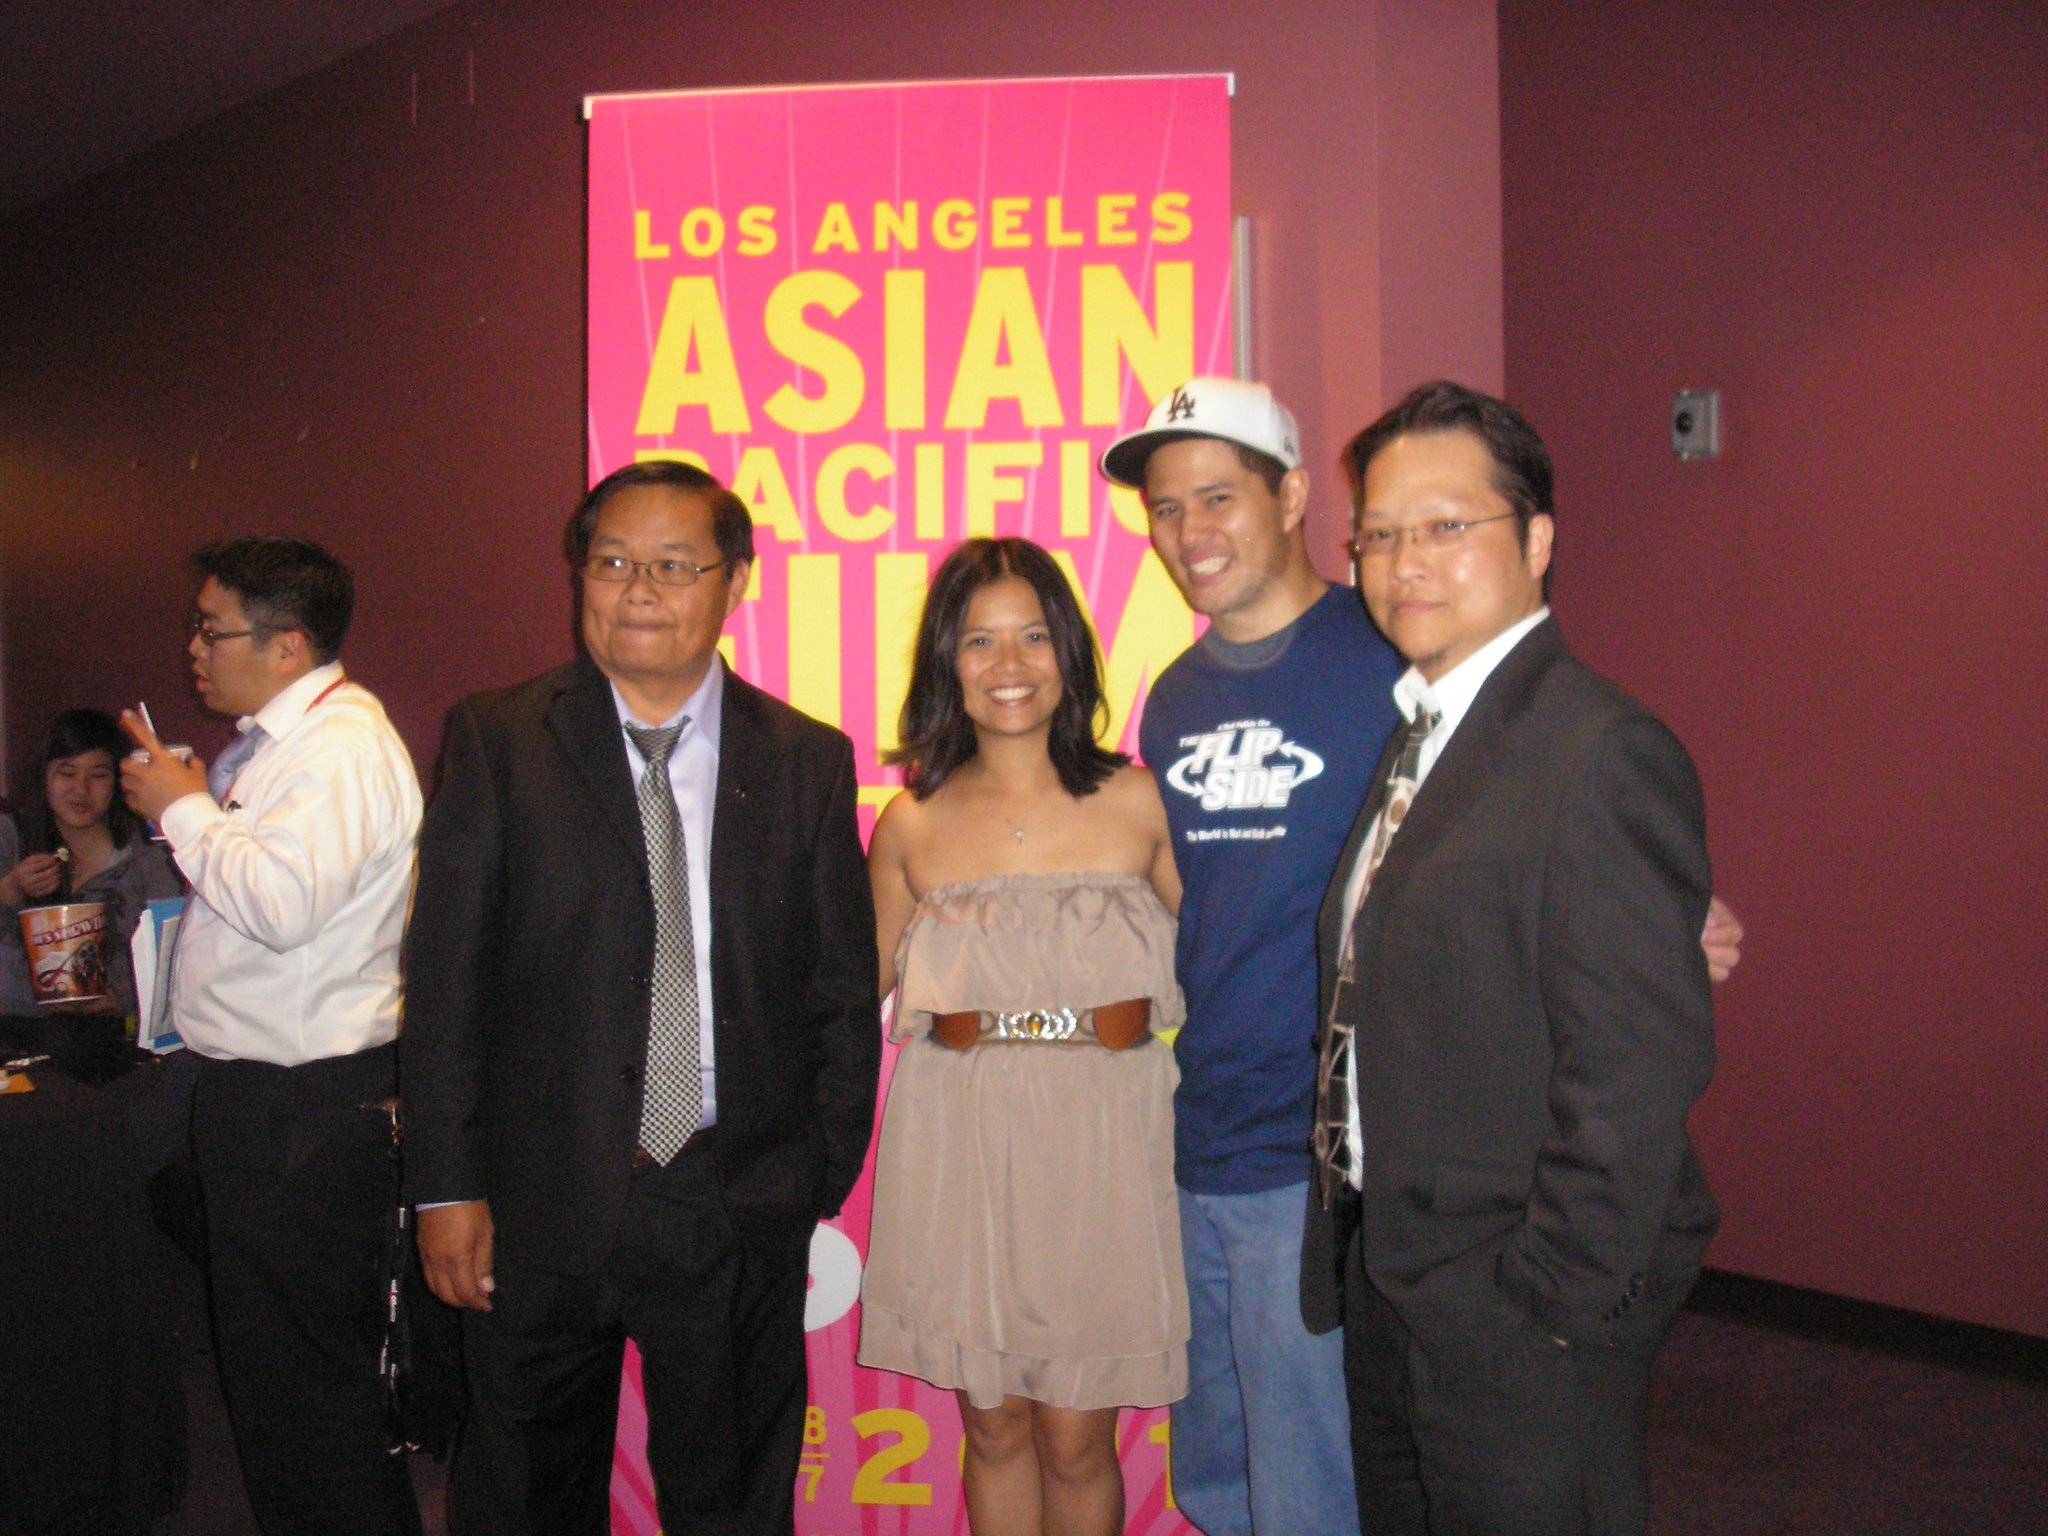 10th yr anniversary at Laemmle Sunset 5 04/30/11 with Abe Pagtama, Rona Par Meyazaki, Rod Pulido, and Edwin Santos.